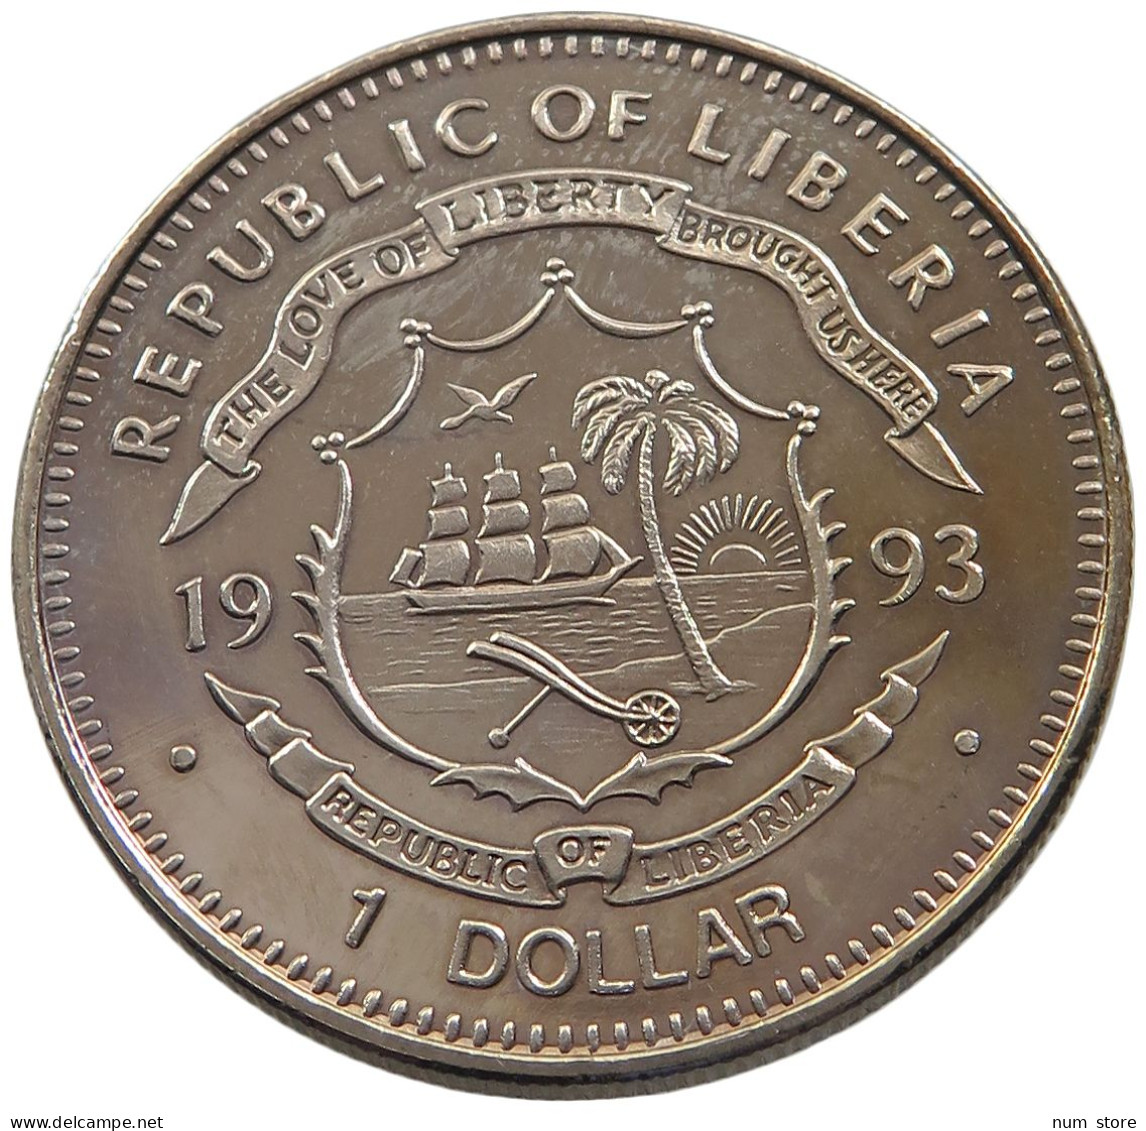 LIBERIA DOLLAR 1993 ATCHAEOPTERYX UNC #sm14 0929 - Liberia